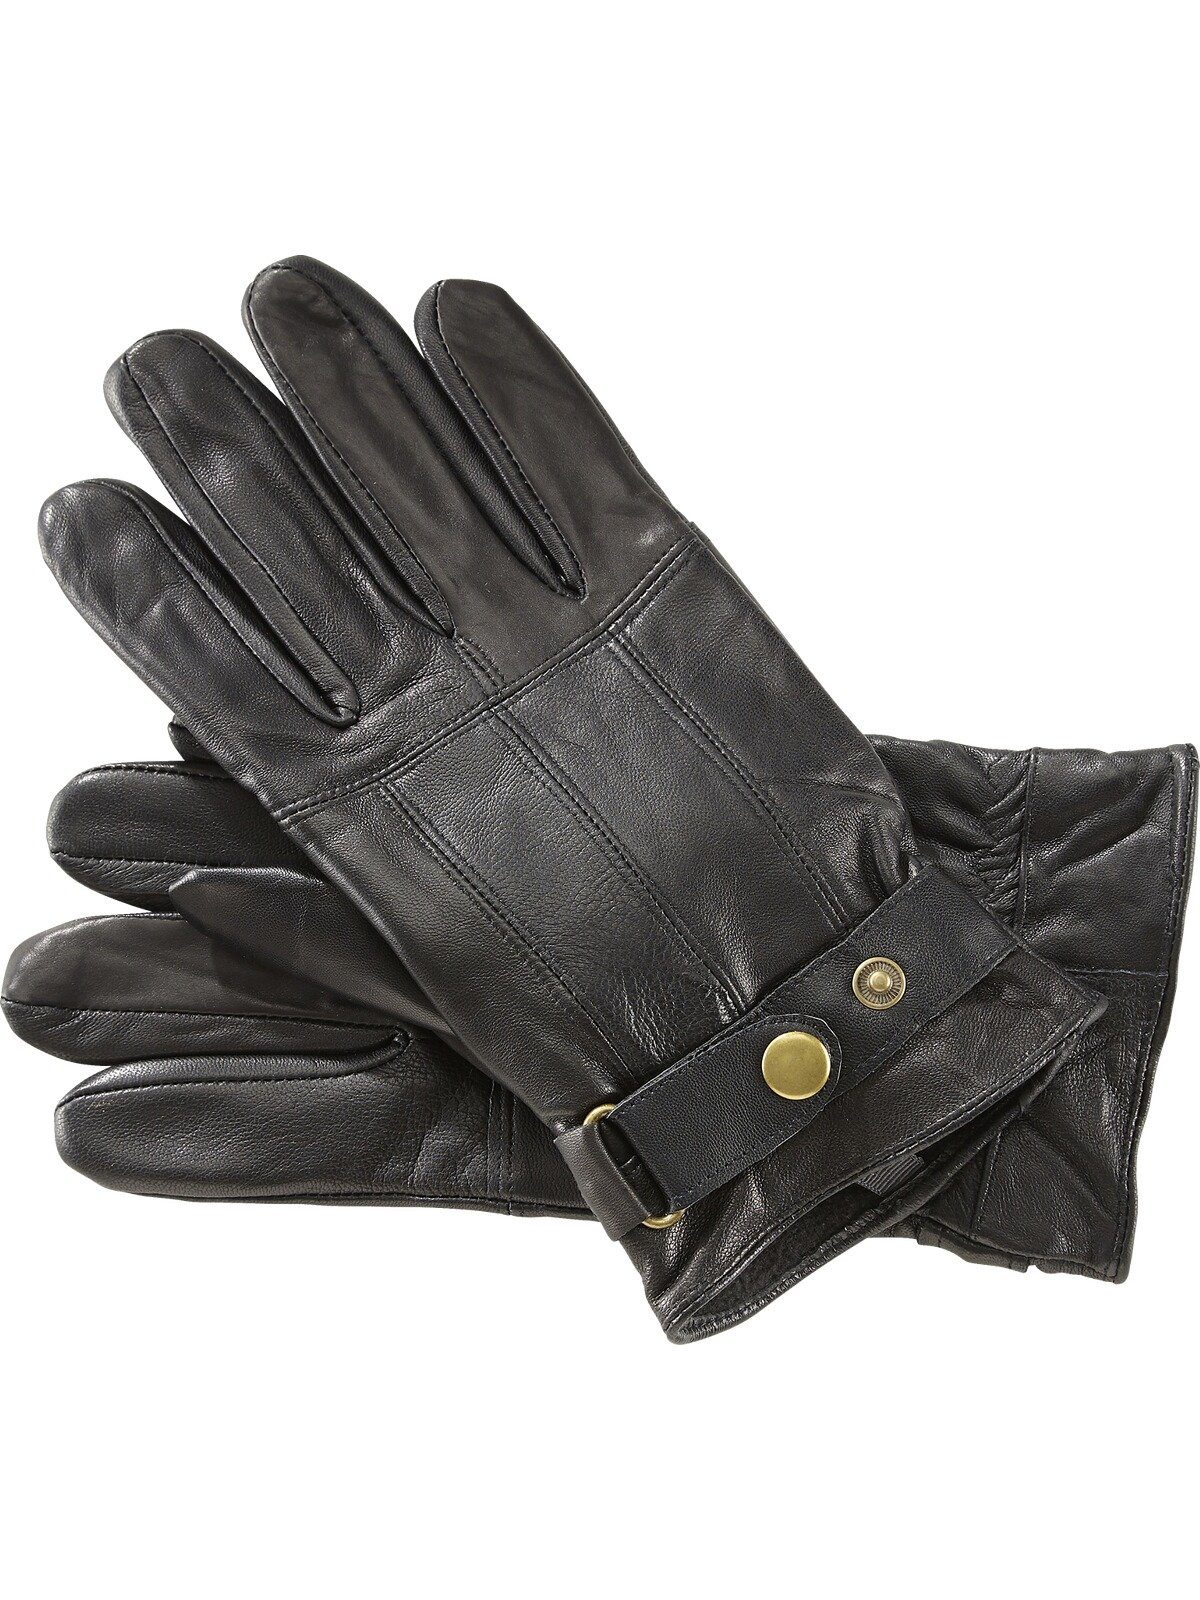 Herren Winter Lederhandschuhe » Warme Handschuhe online kaufen | OTTO